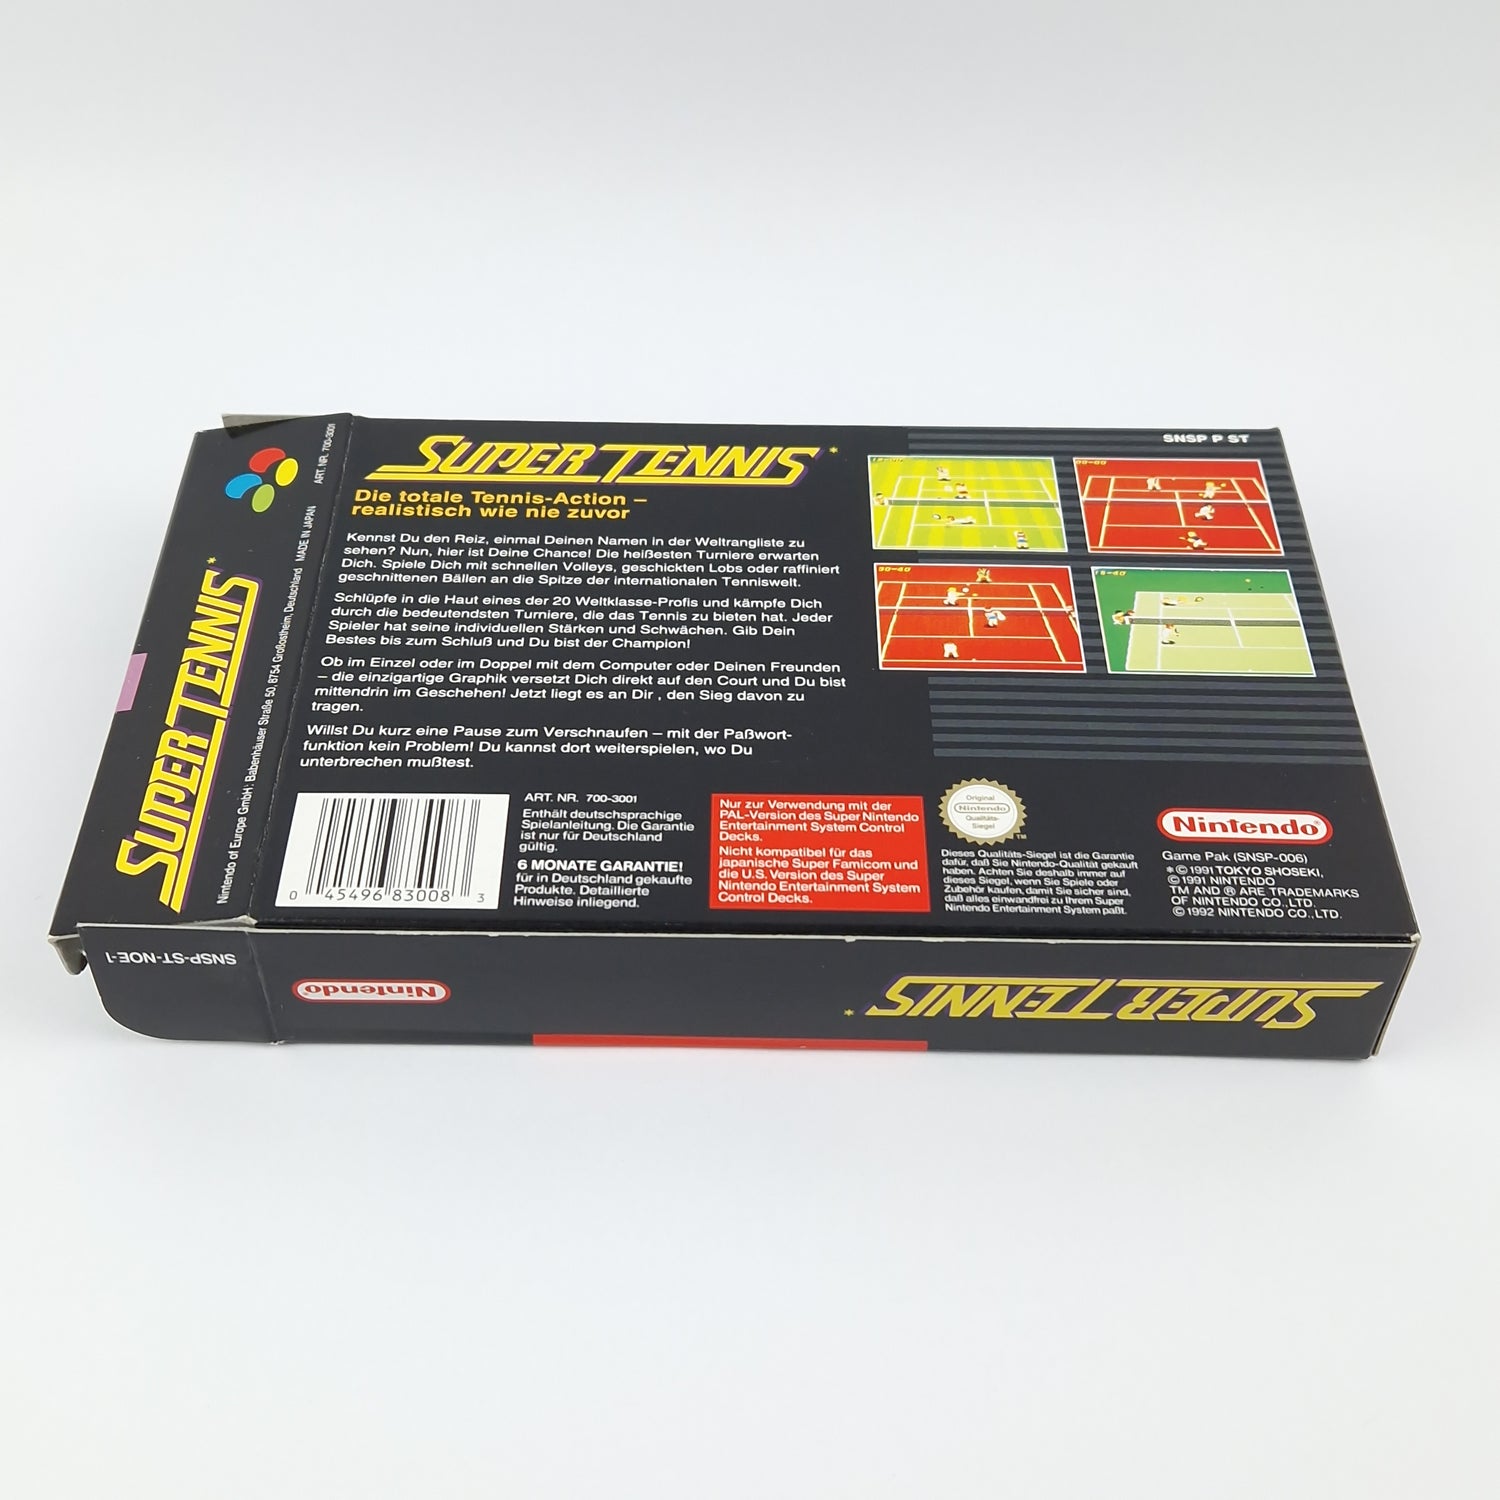 Super Nintendo Game: Super Tennis - SNES Module Instructions OVP cib / PAL Sport